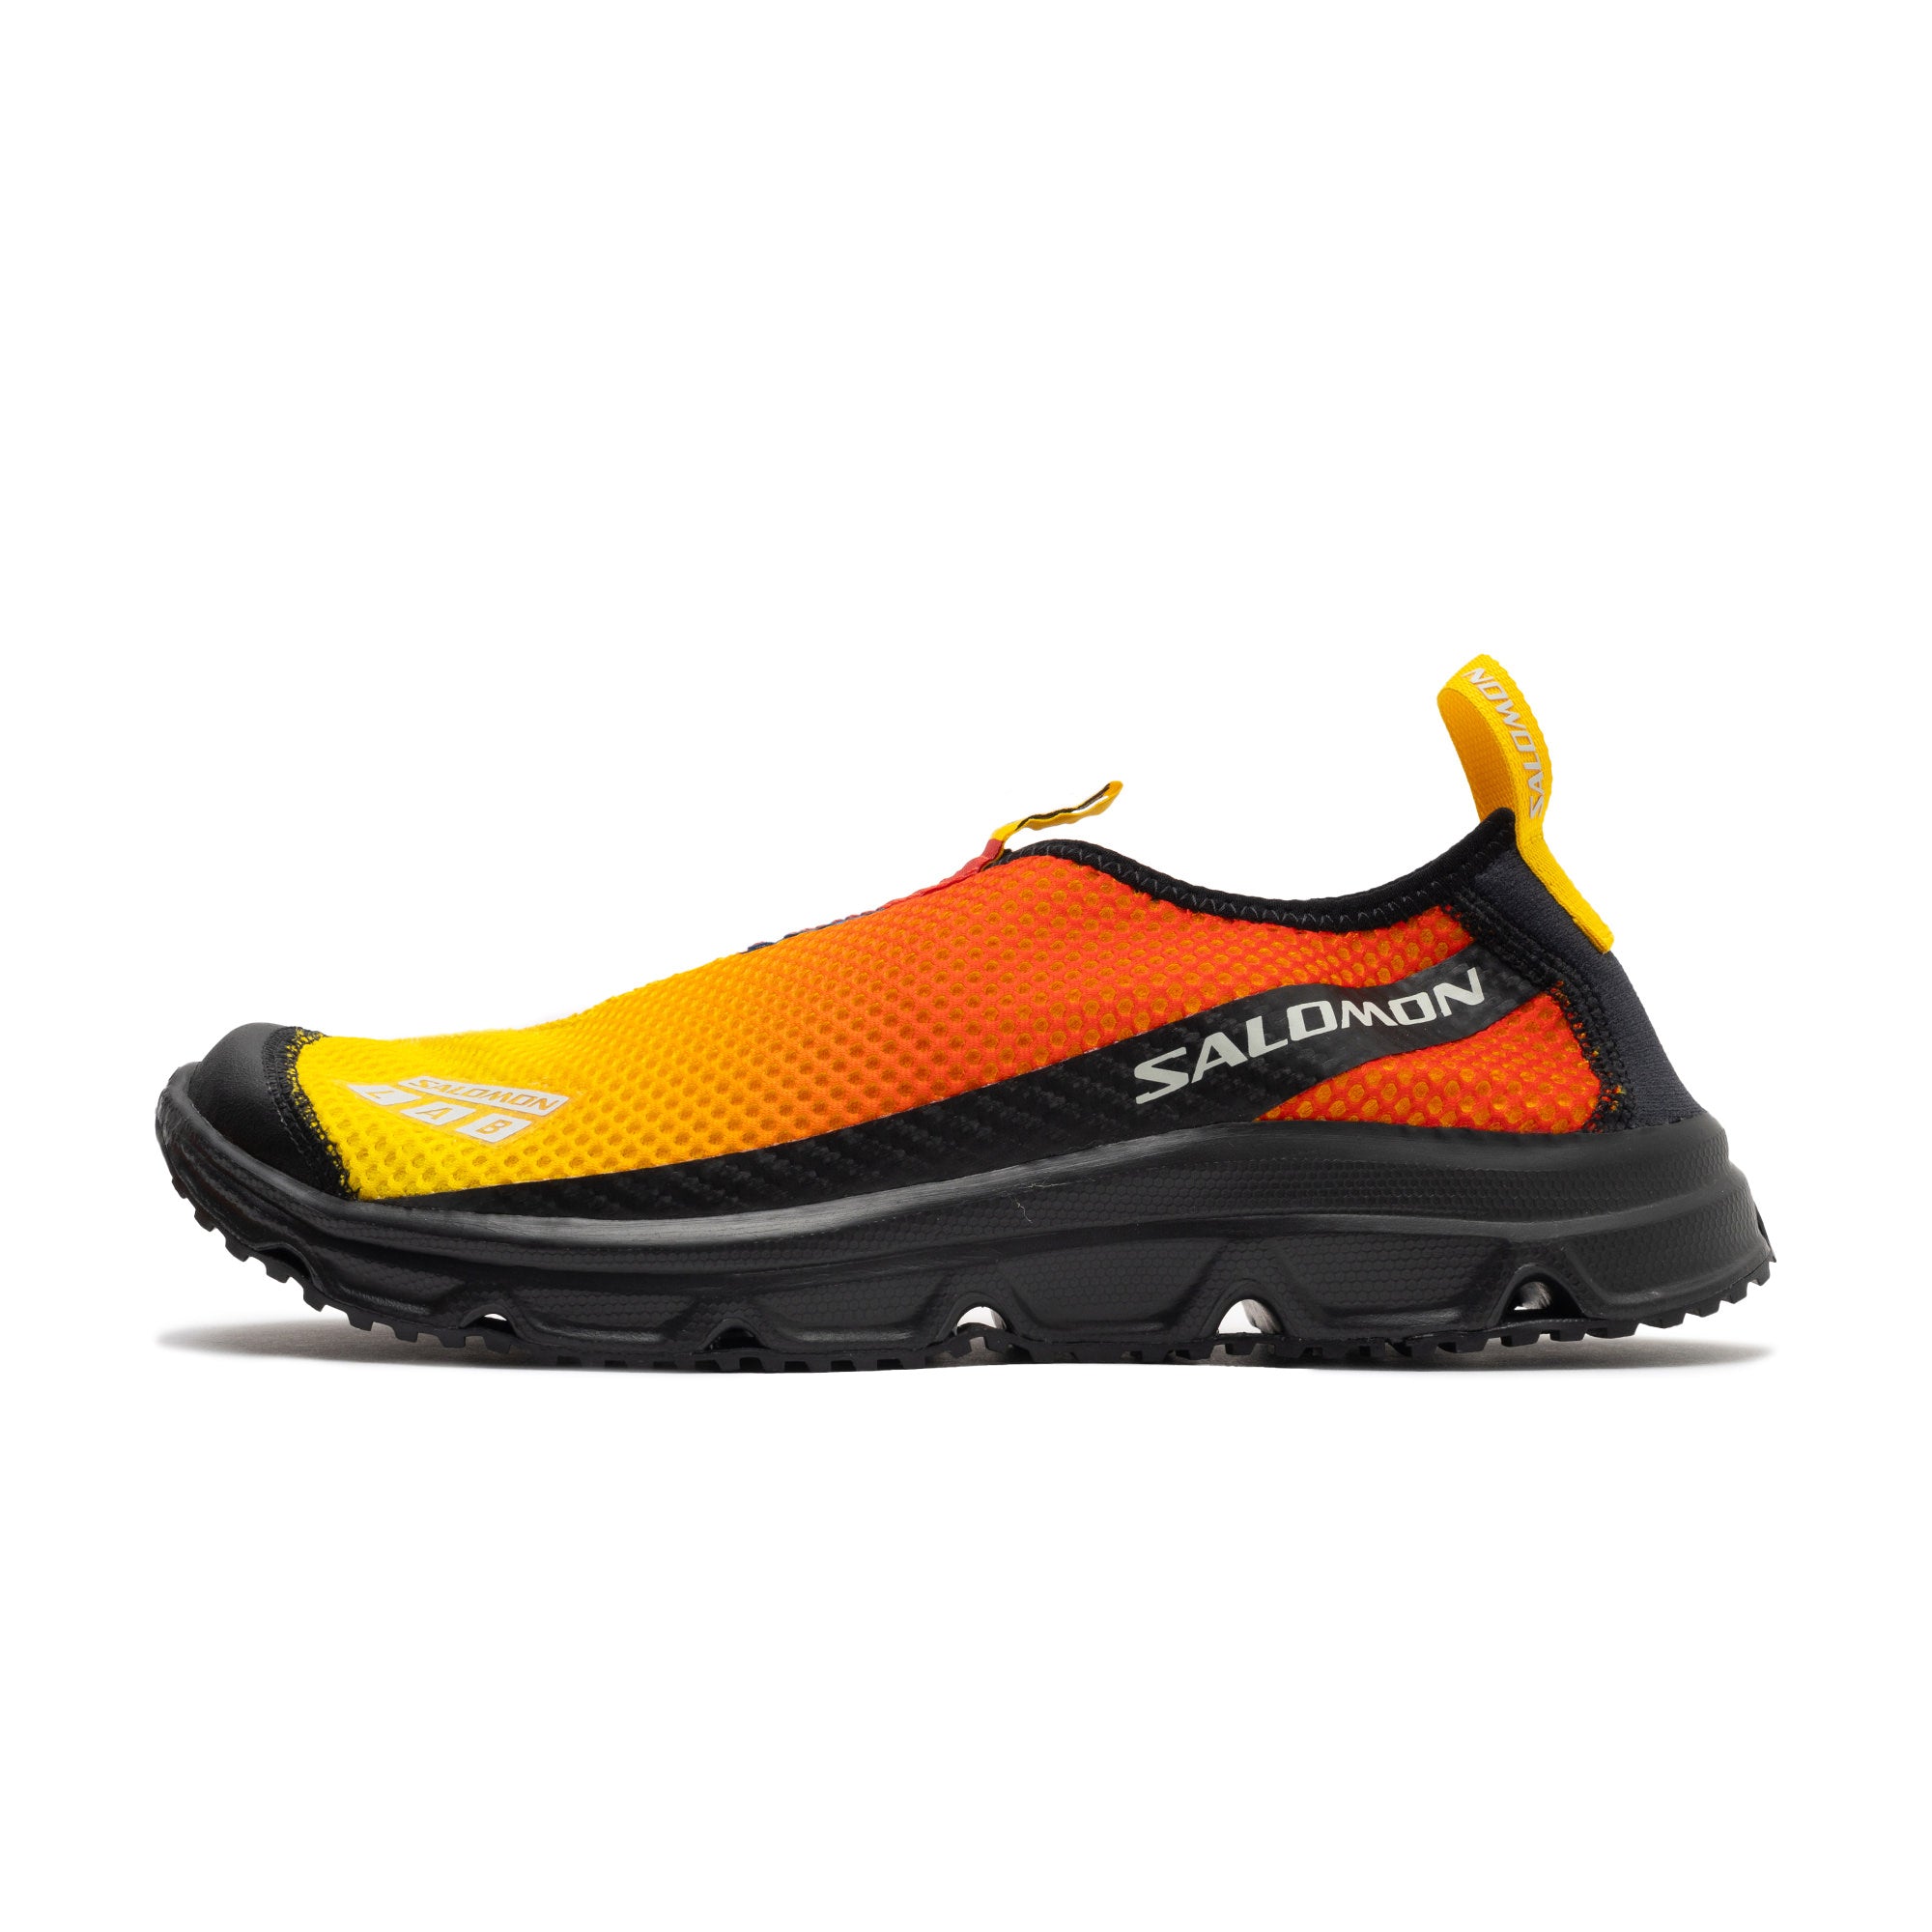 zapatillas de running Salomon pista talla 46.5